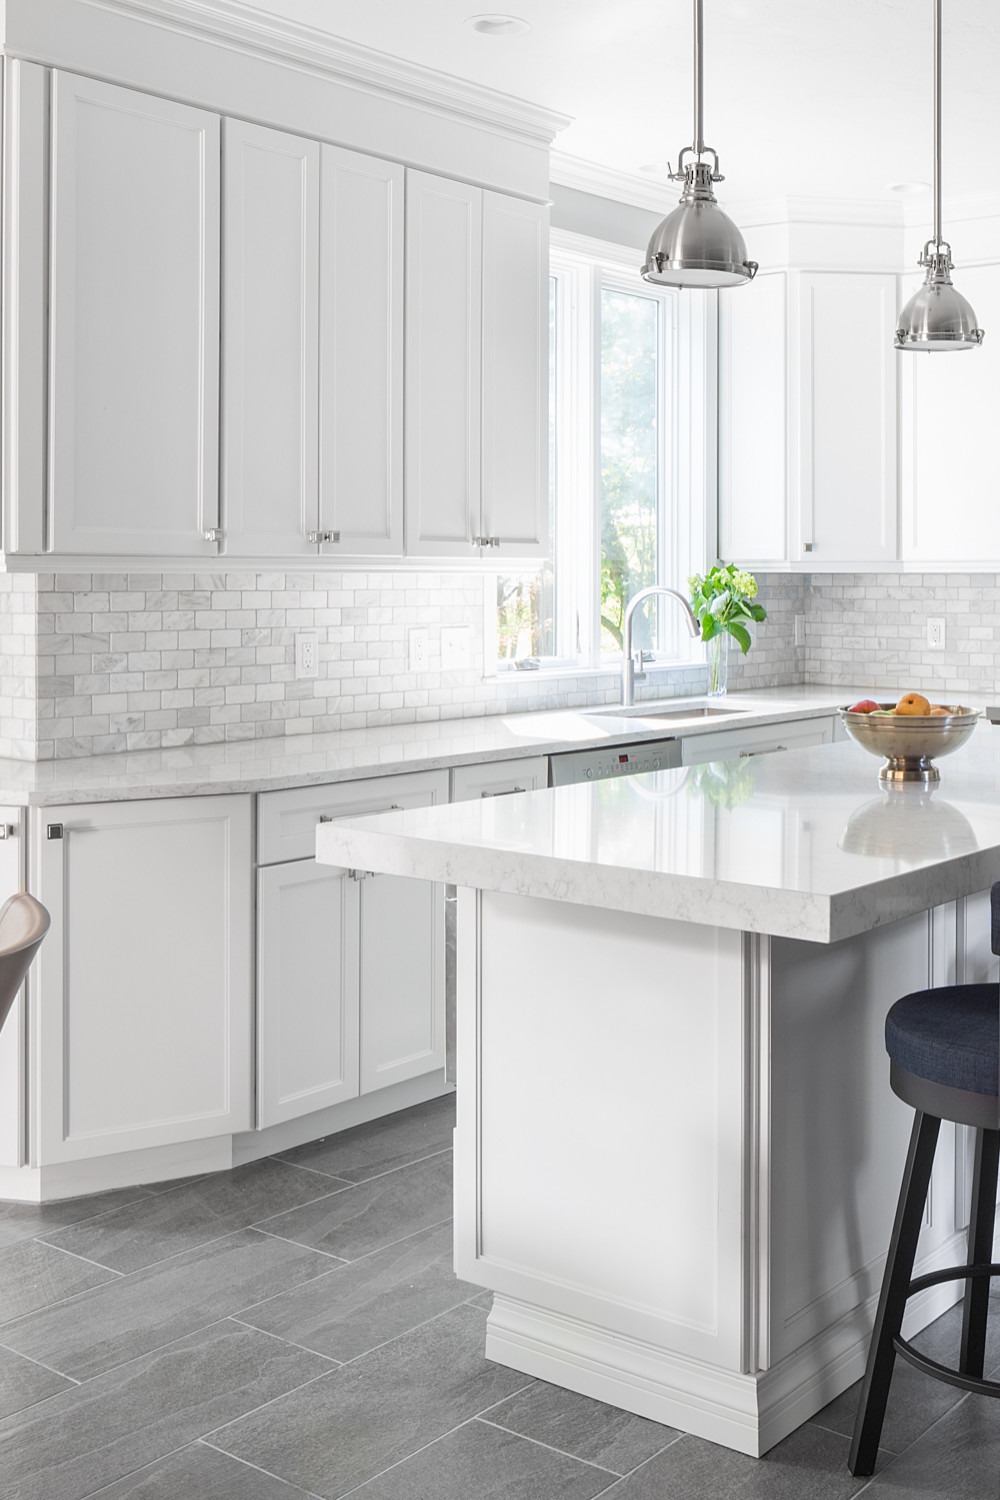 Marble Subway Tile Backsplash Ideas For White Kitchen Cabinets Stunning Focal Point